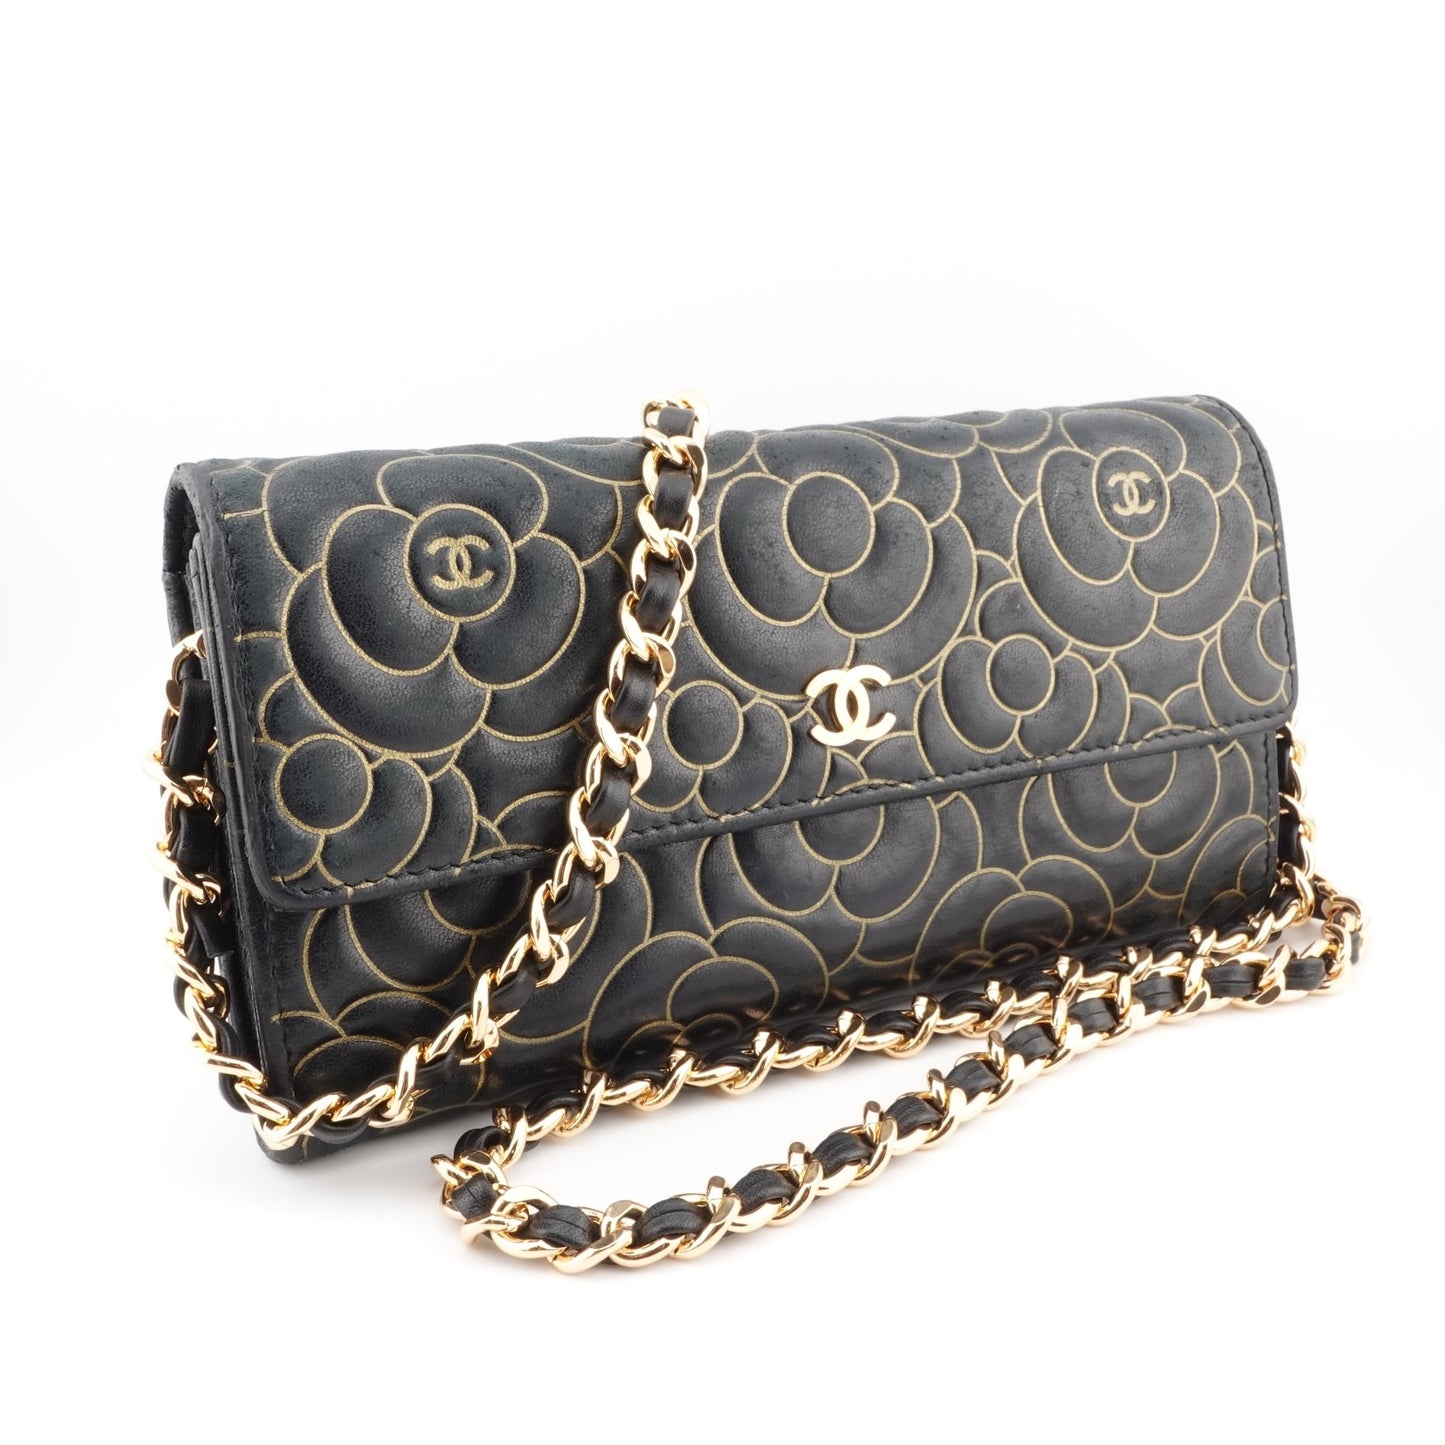 CHANEL Lambskin Camellia Long Flap Wallet on Chain - Bag Envy